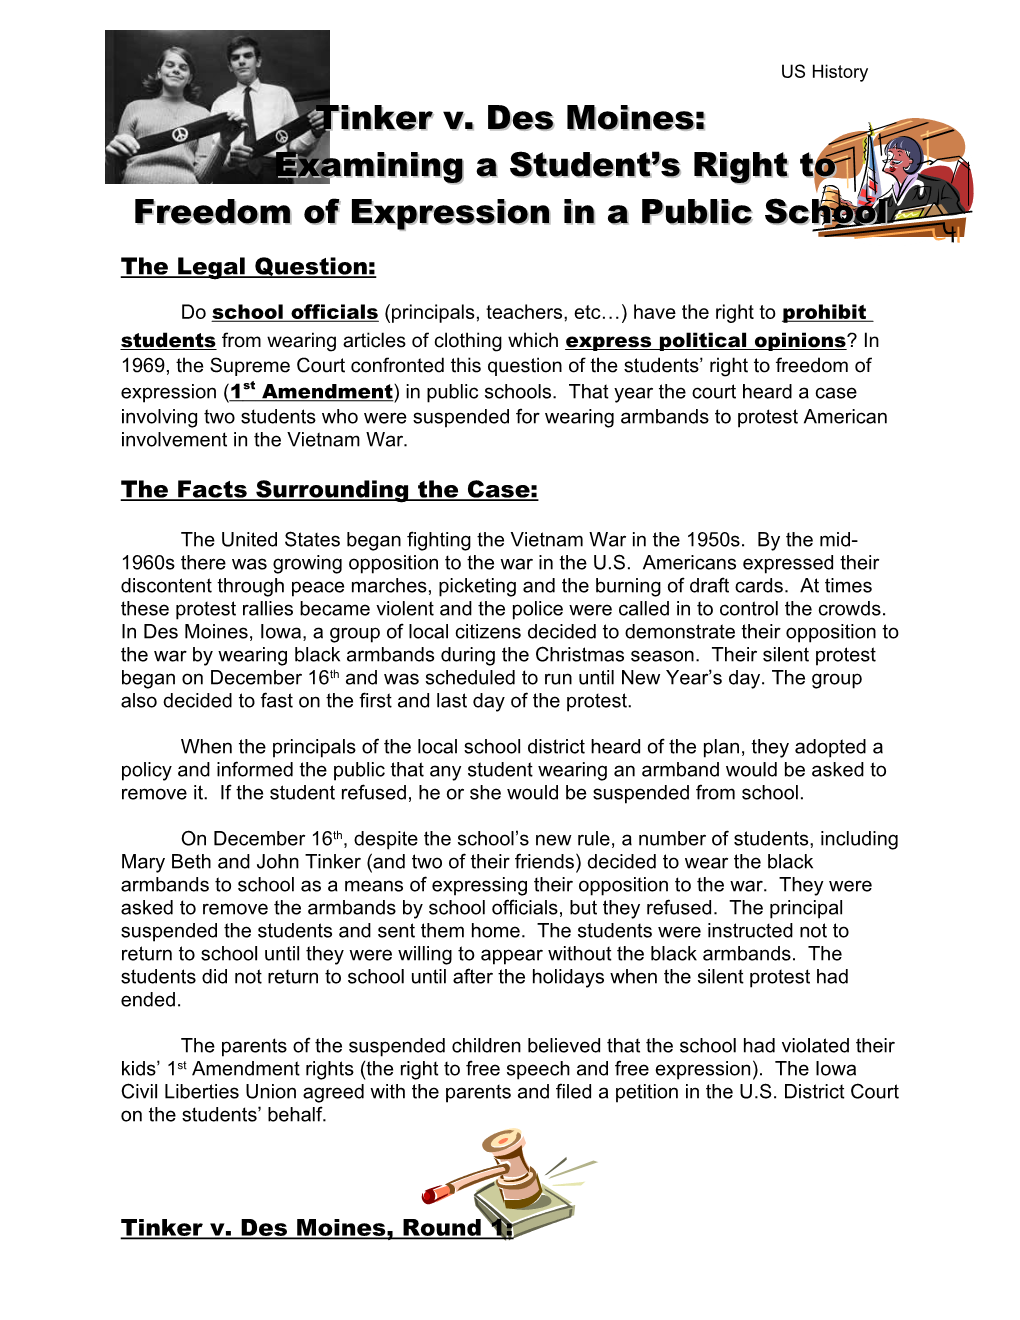 Freedom of Expression in a Public School